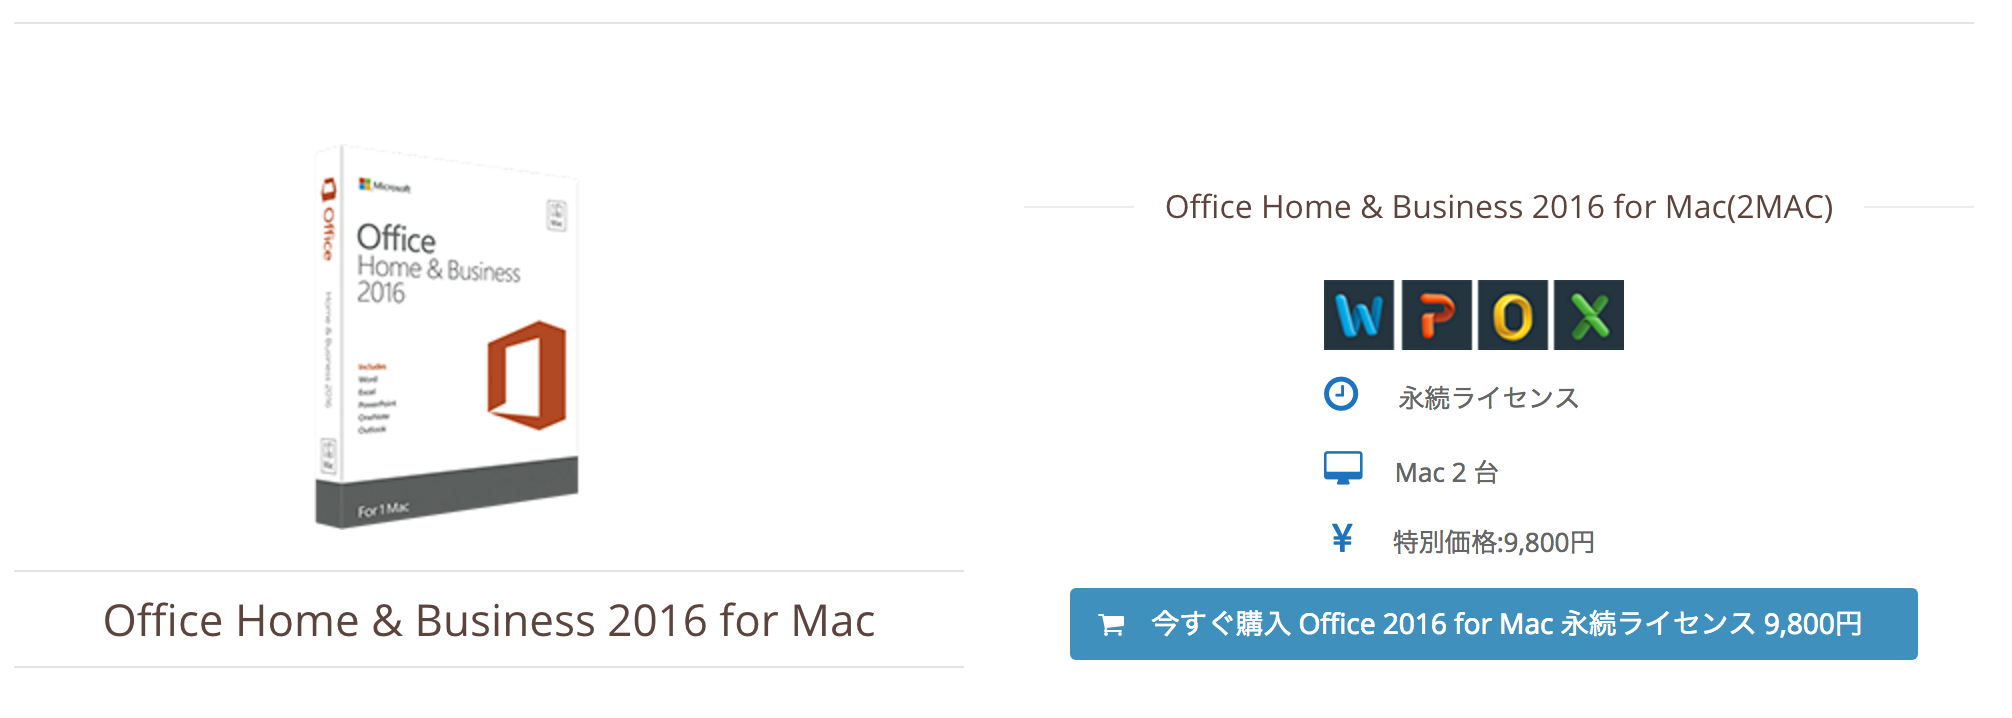 Mac版office 16 激安セールス 無料トライアル30日 Office Mac 11 16 ダウンロード版 機能と価格比較